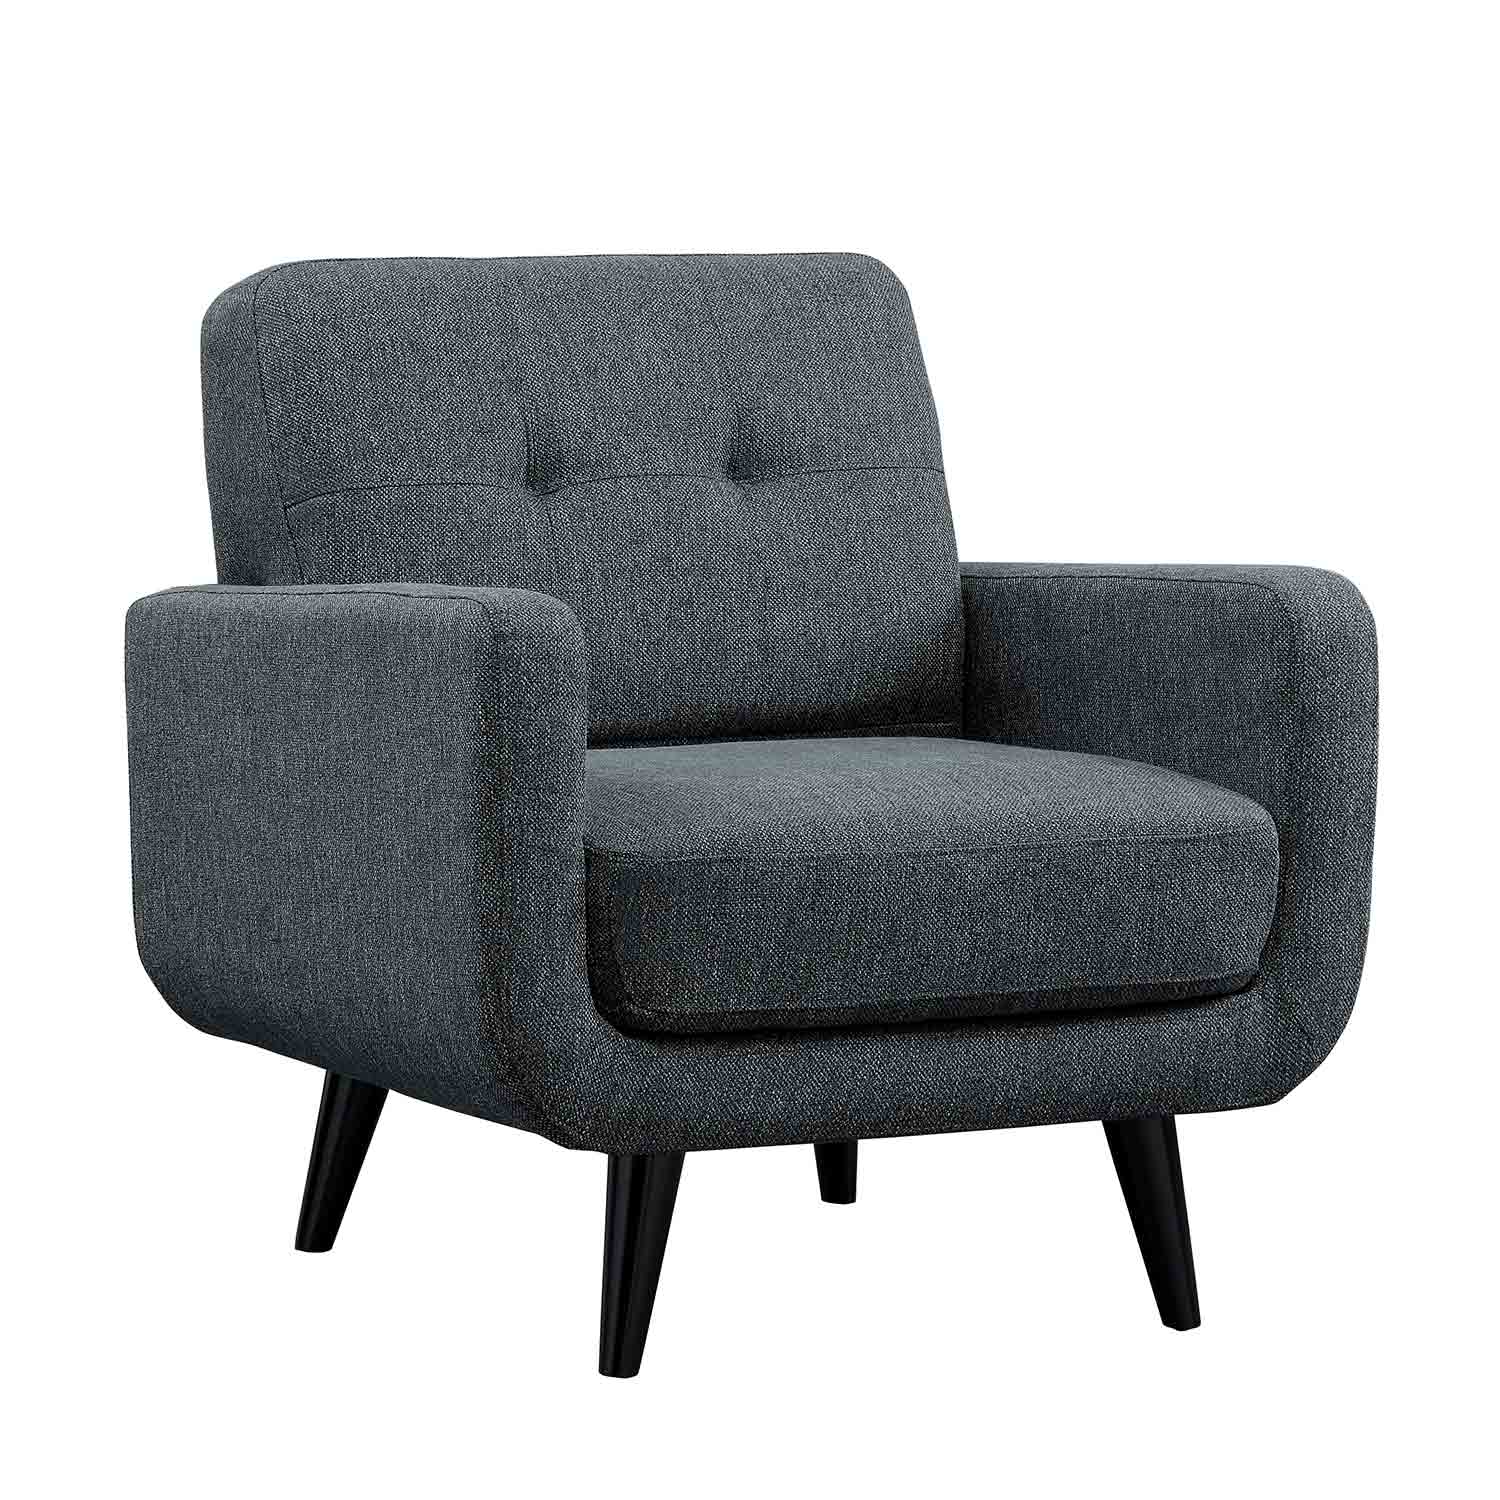 Homelegance Monroe Chair - Gray